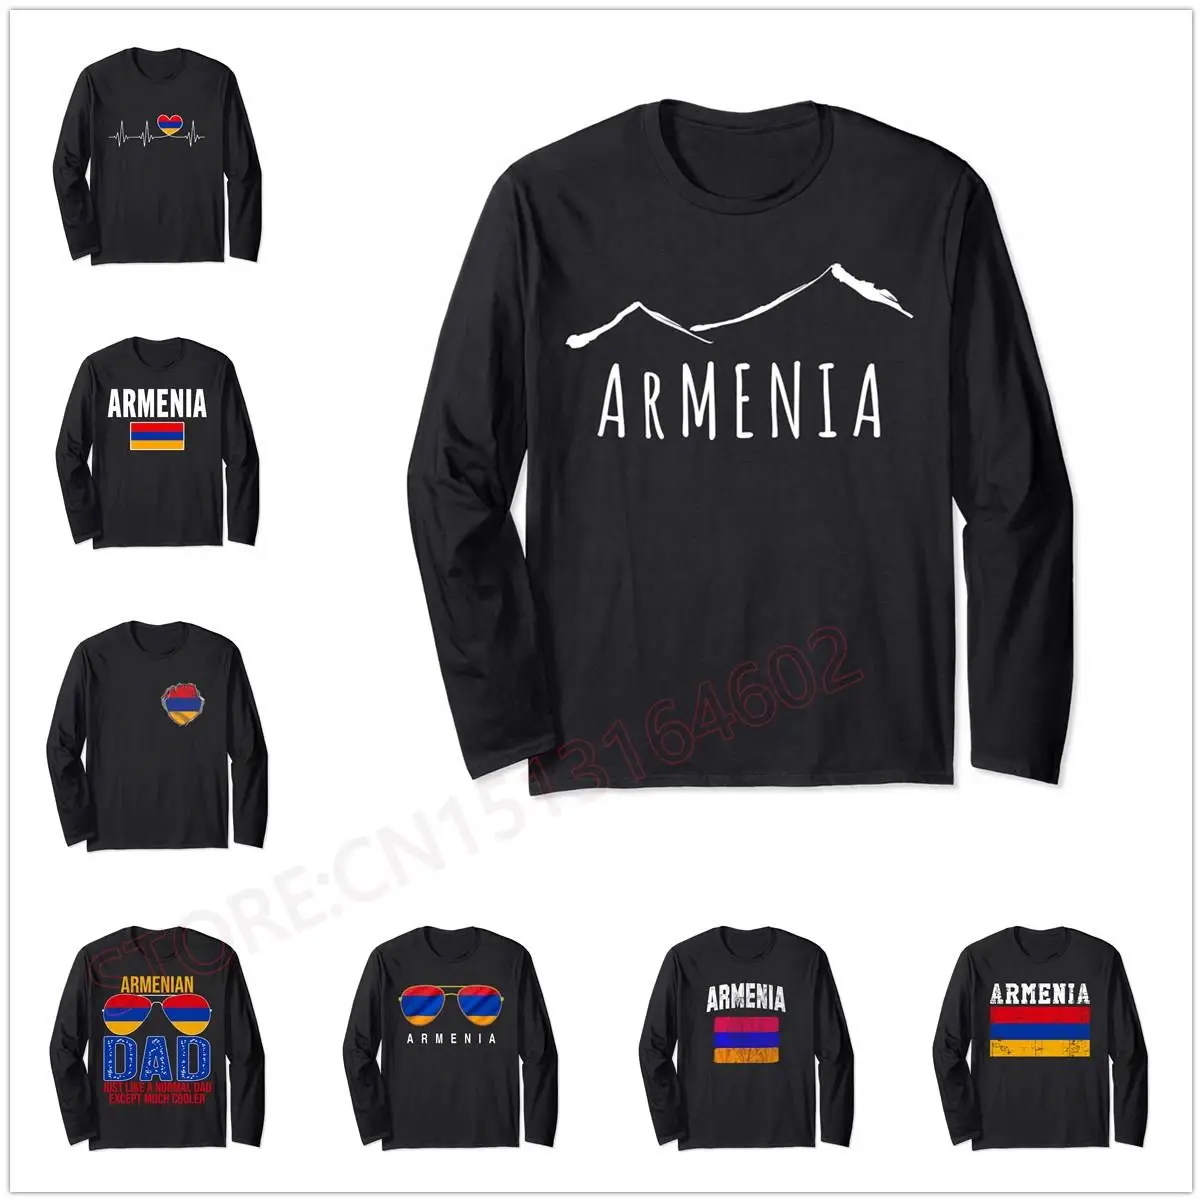 Ararat Yerevan Armenia Long Sleeve For Armenians Men Women Unisex T-Shirt LS Tops 100% Cotton Tees